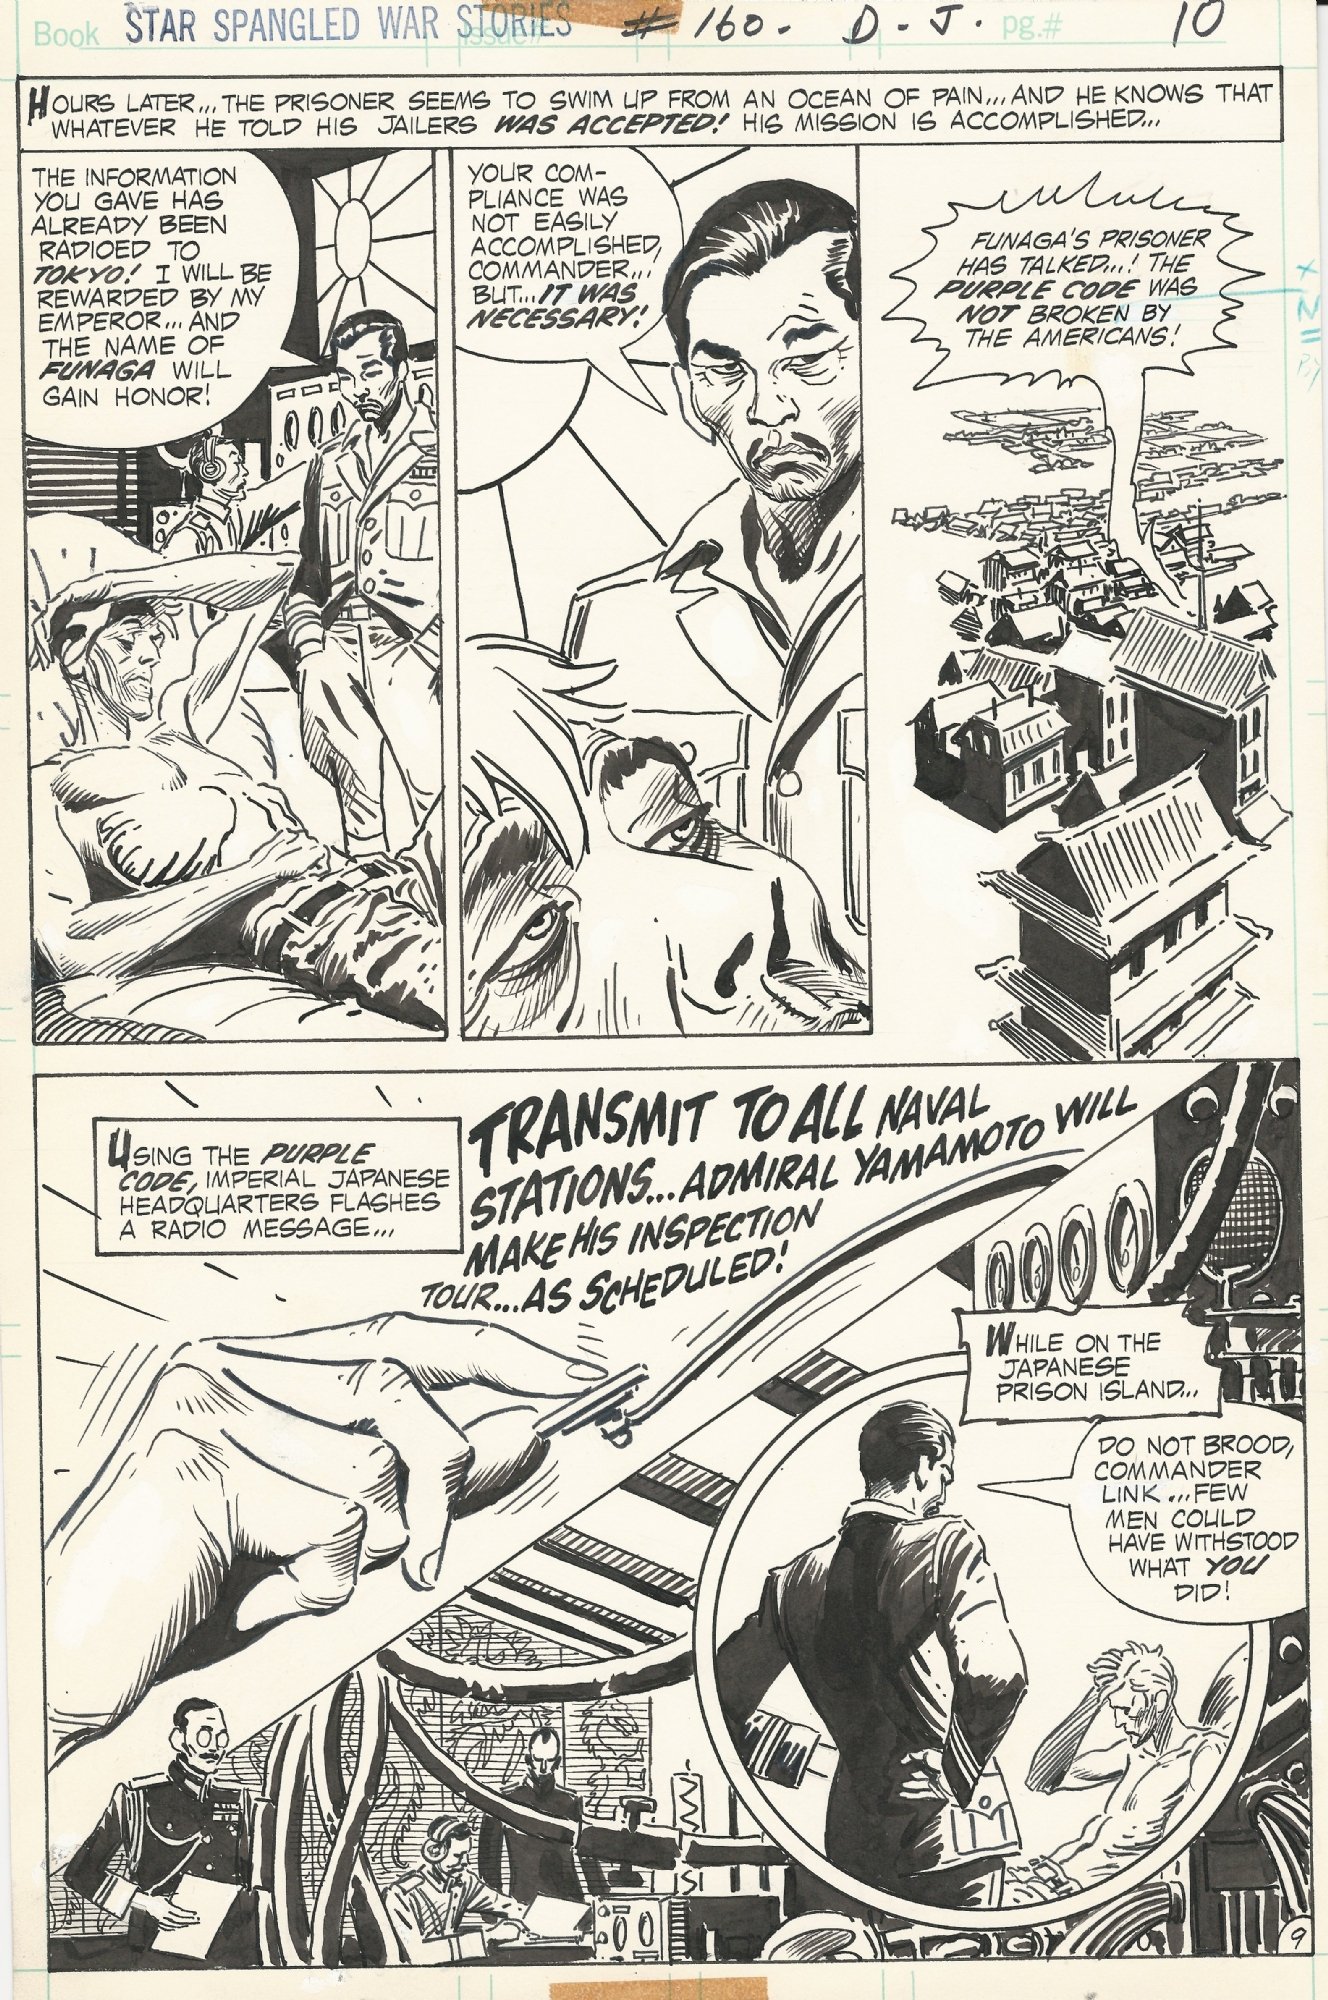 CHEVEUX DE FEU/Joe kubert/ 1978年 USA - 少年漫画